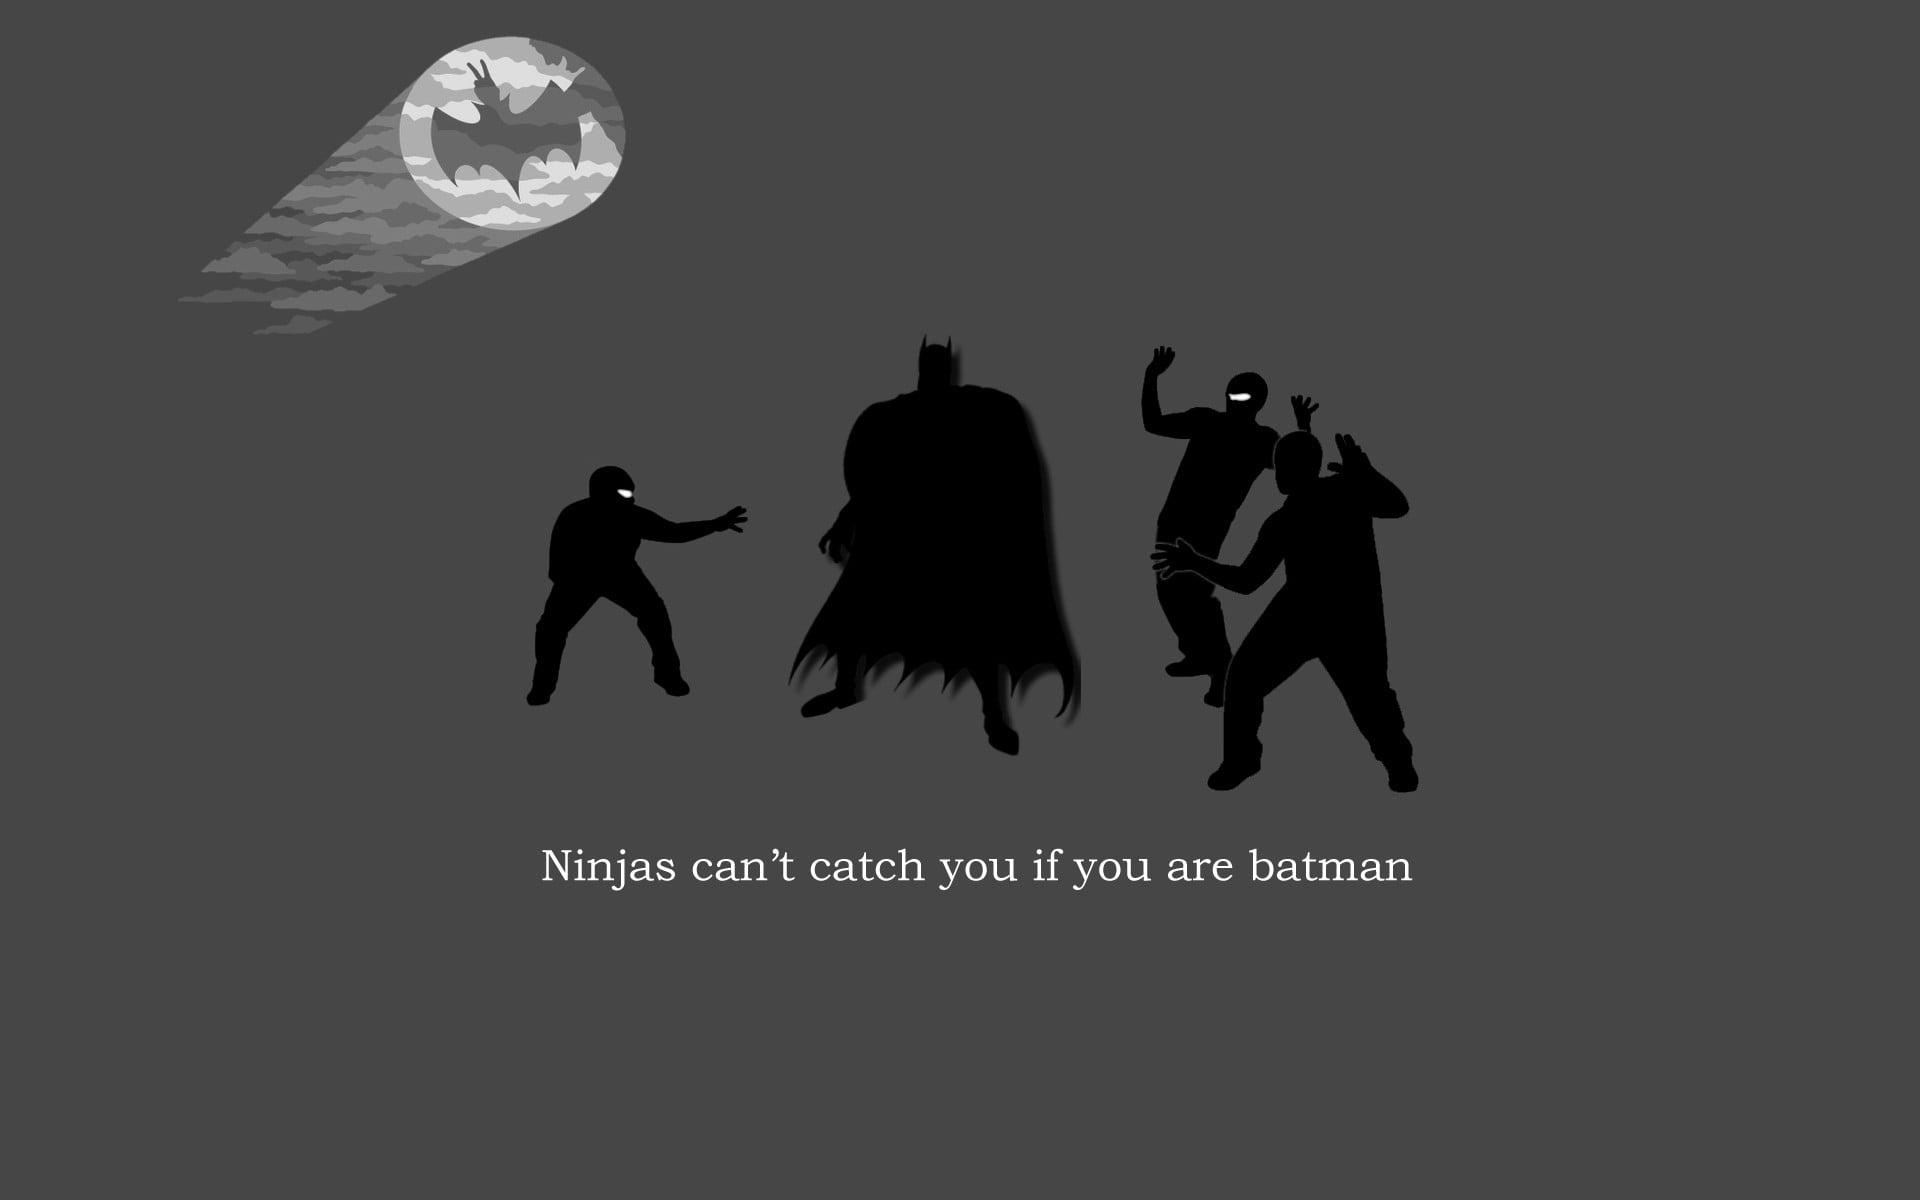 Batman shadow illustration, Batman, ninjas